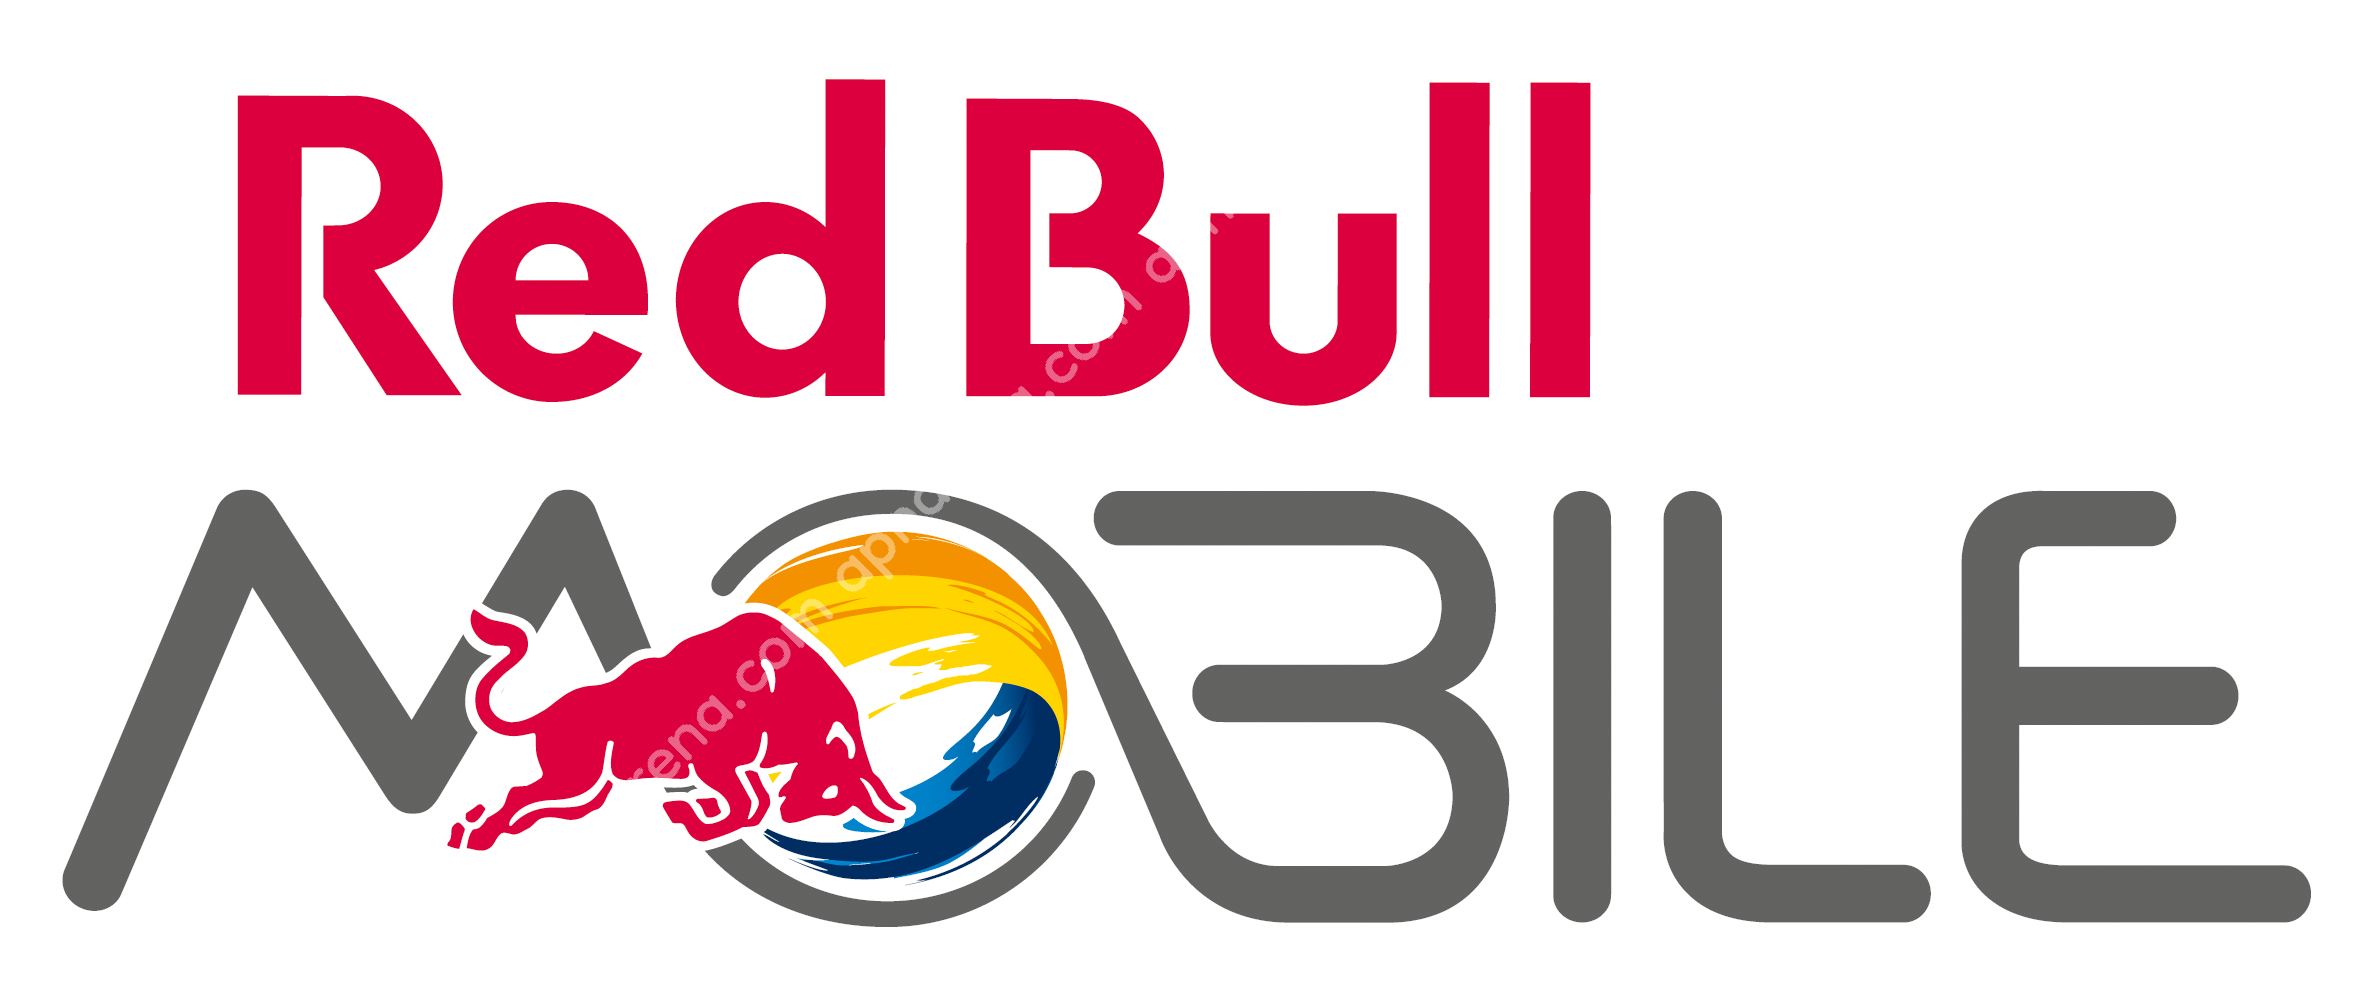 Red Bull Mobile KSA APN Internet Settings Android iPhone